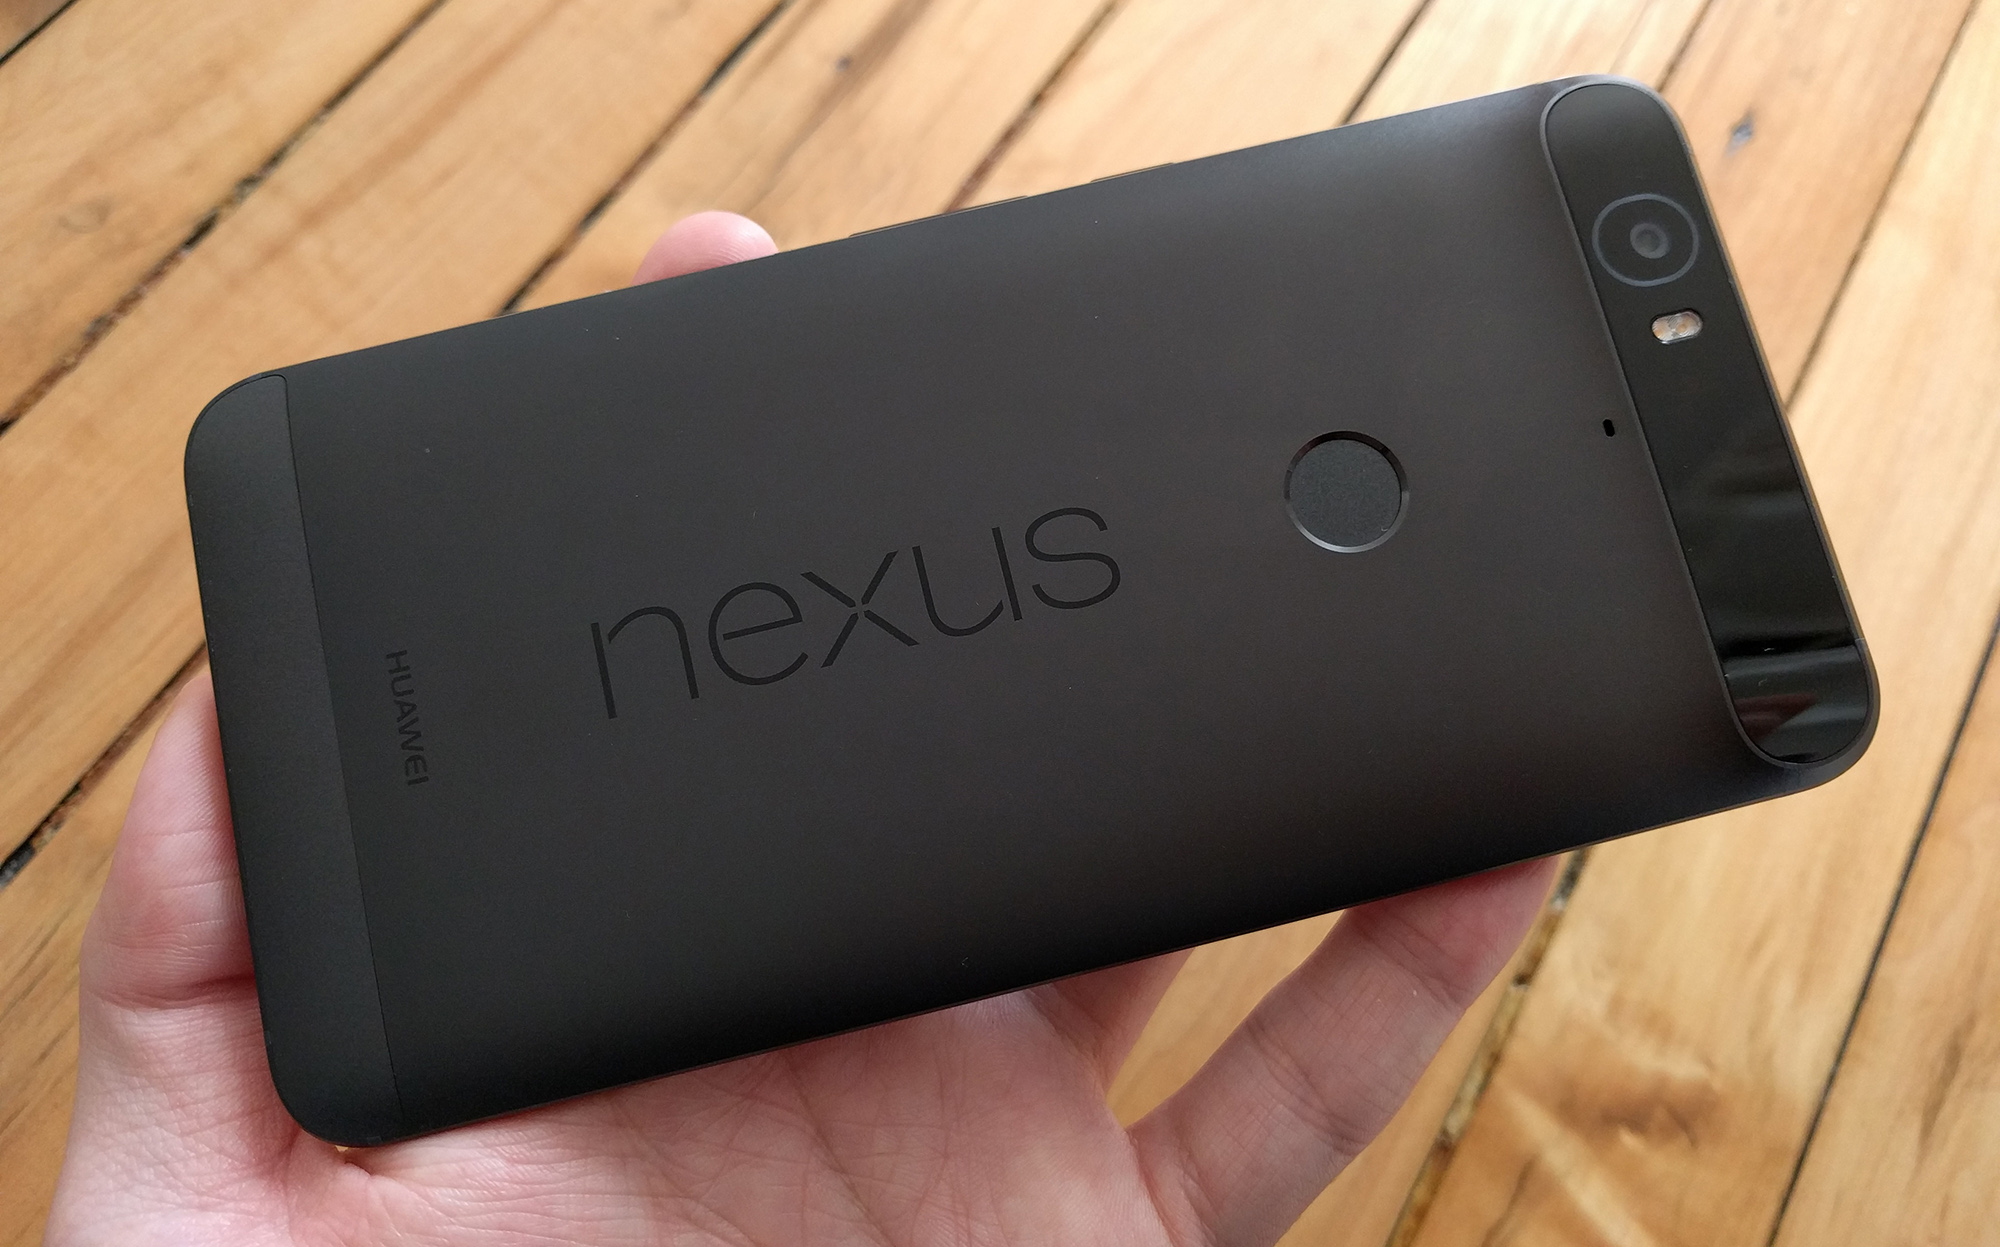 Google Pixel, Pixel XL and Nexus 5X and Nexux6P